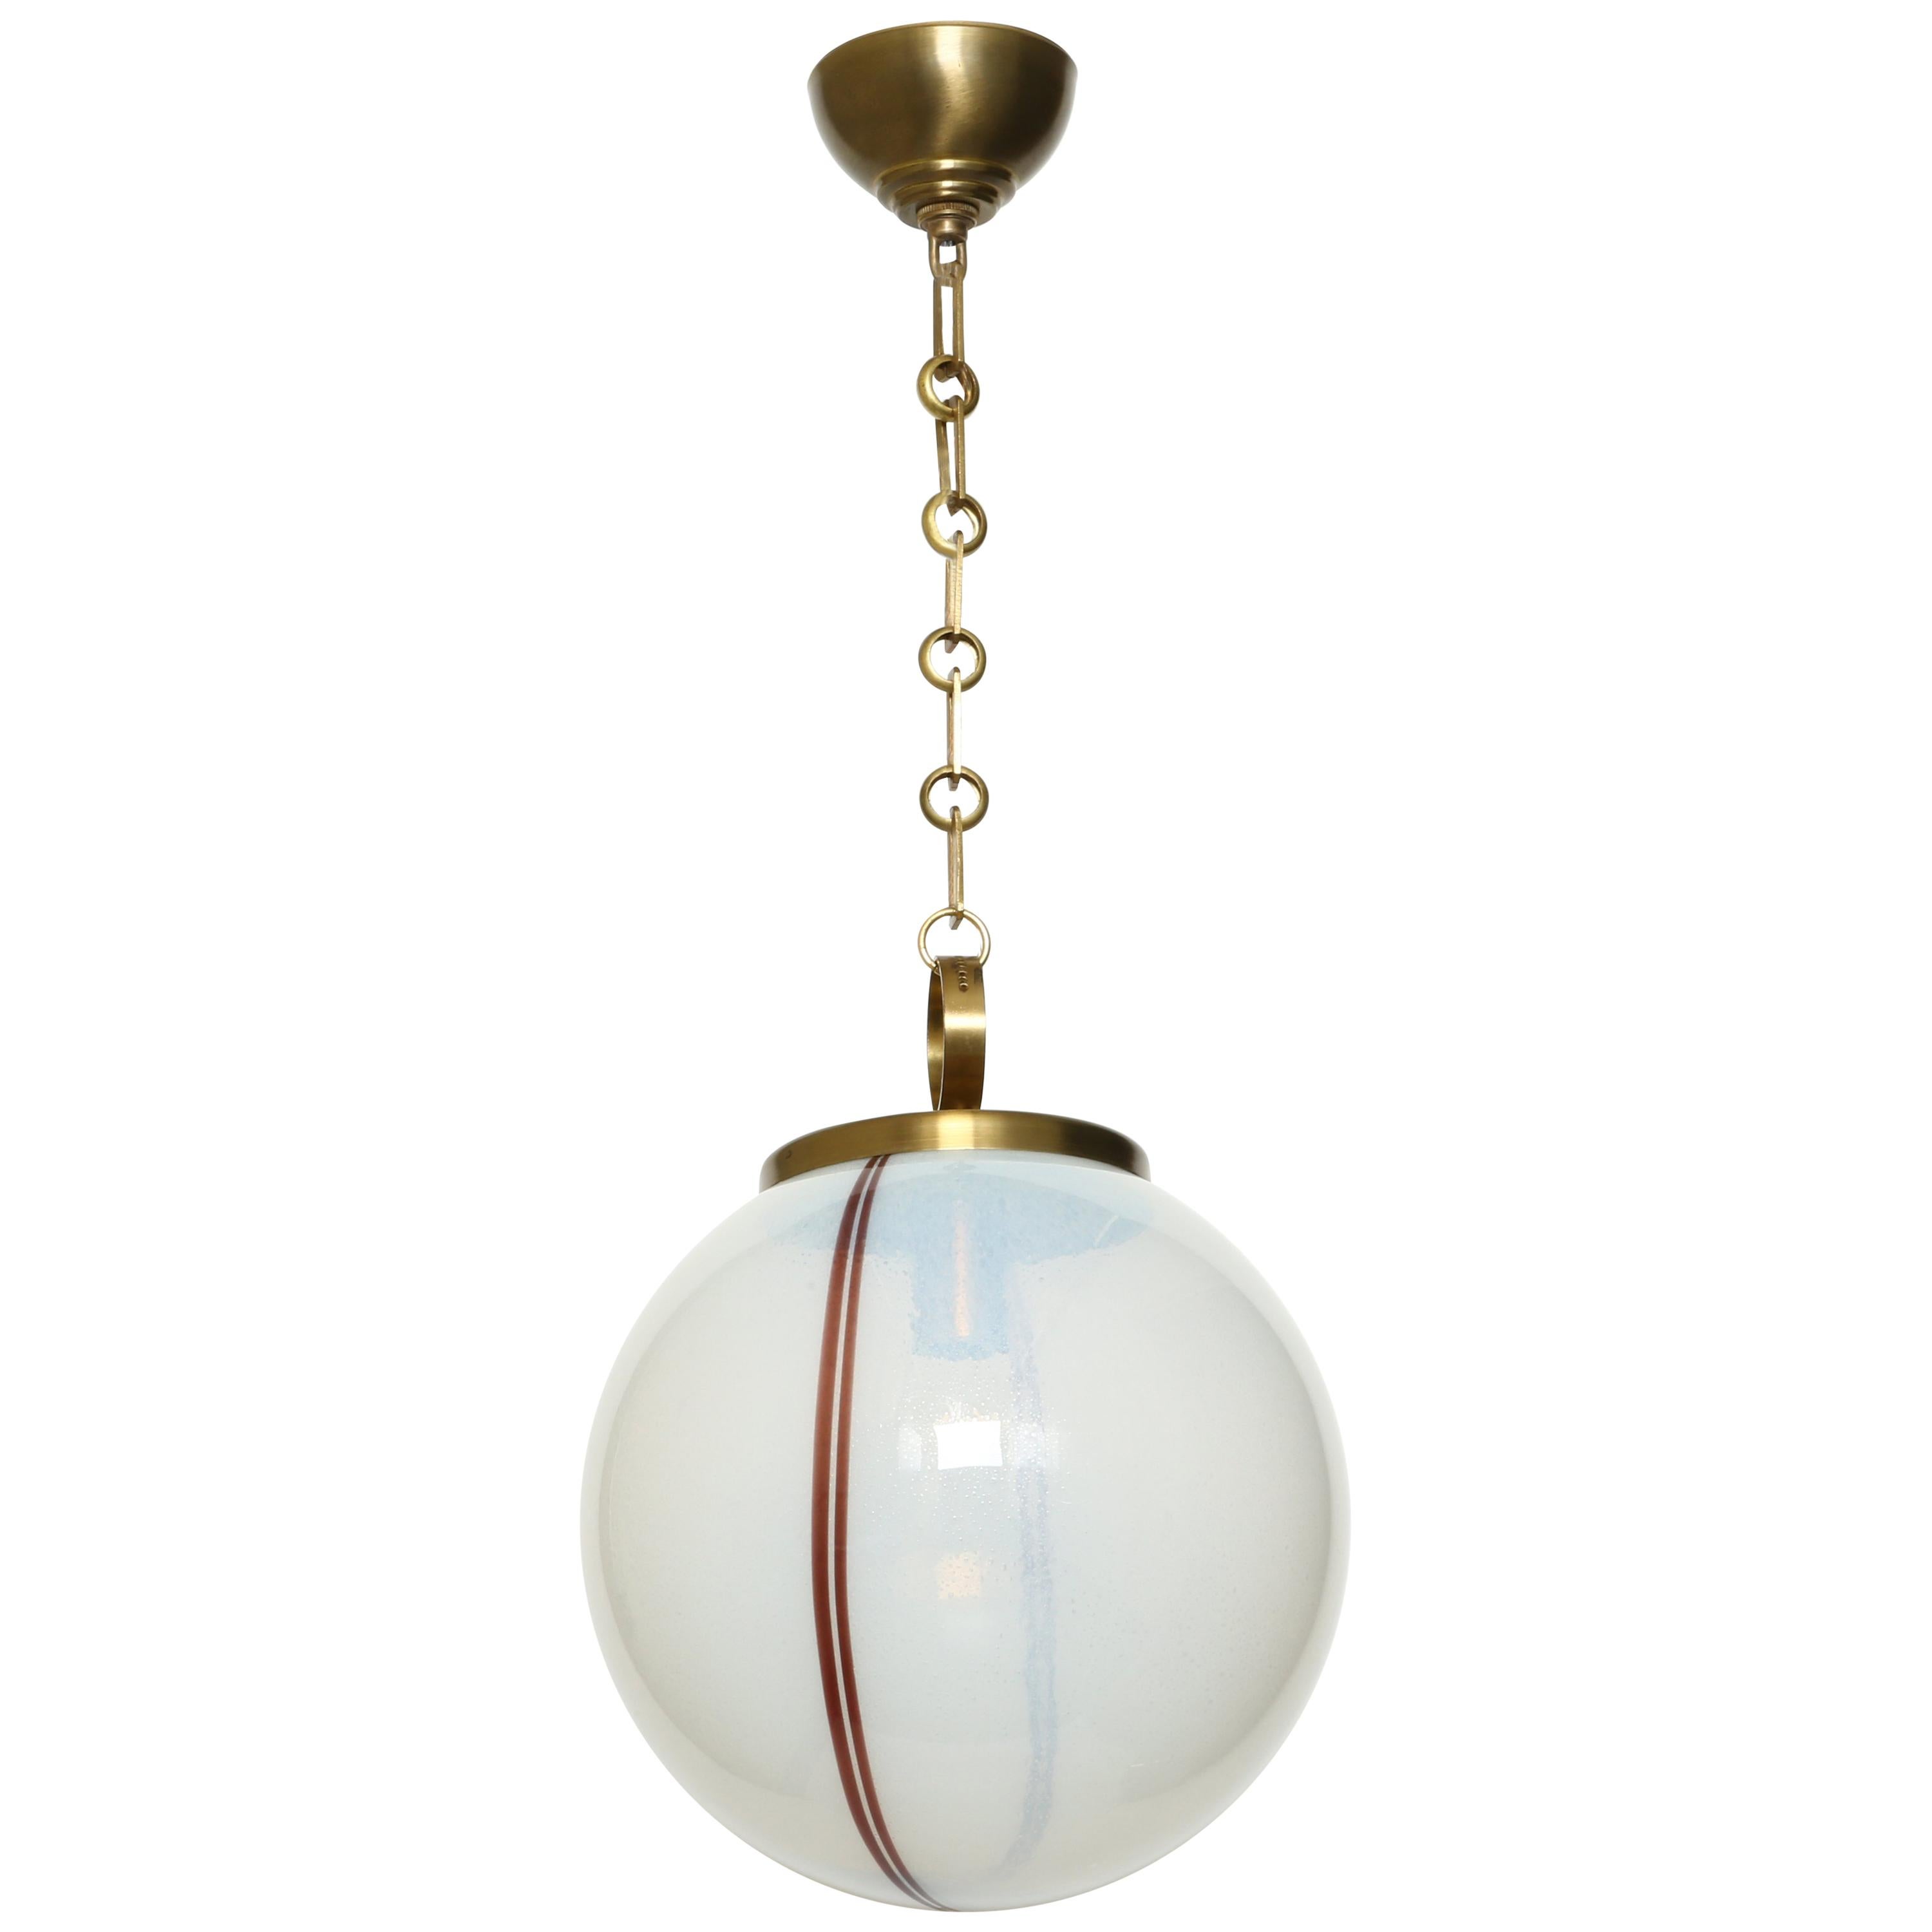 Murano glass Globe Ceiling Pendant